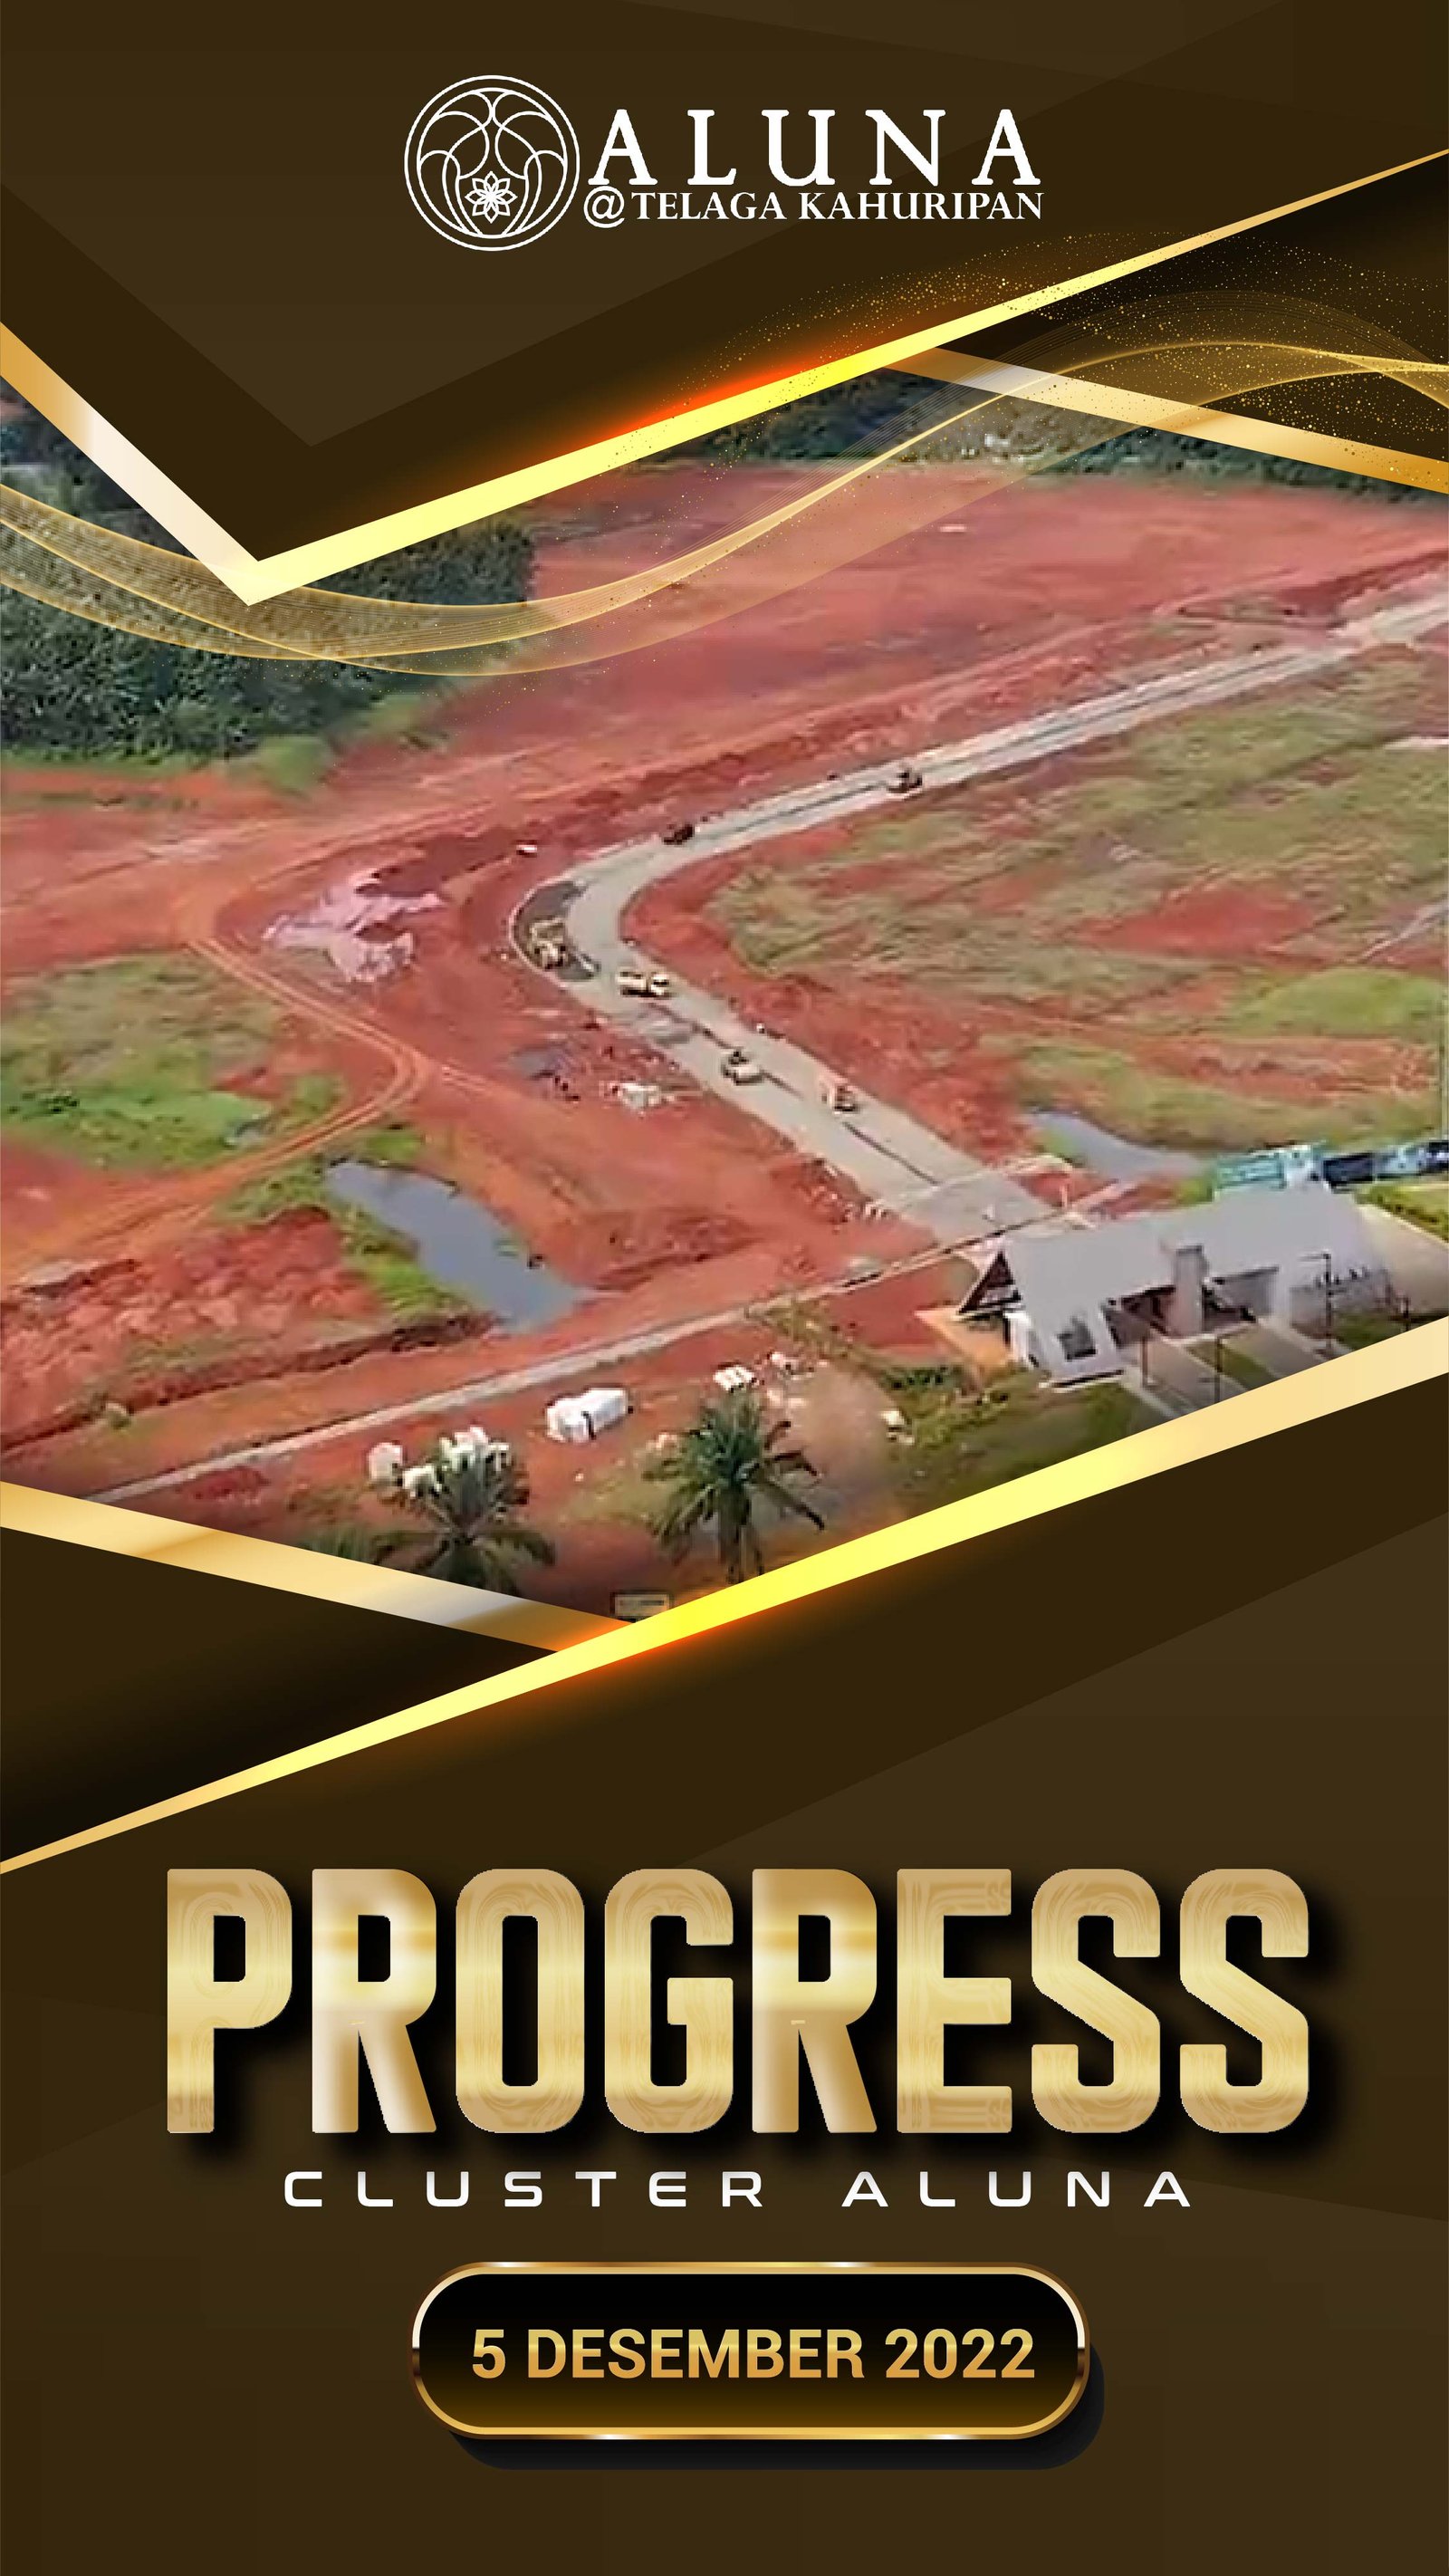 BLOG-progress-project-cluster-aluna-by-telaga-kahuripan-05-desember-2022